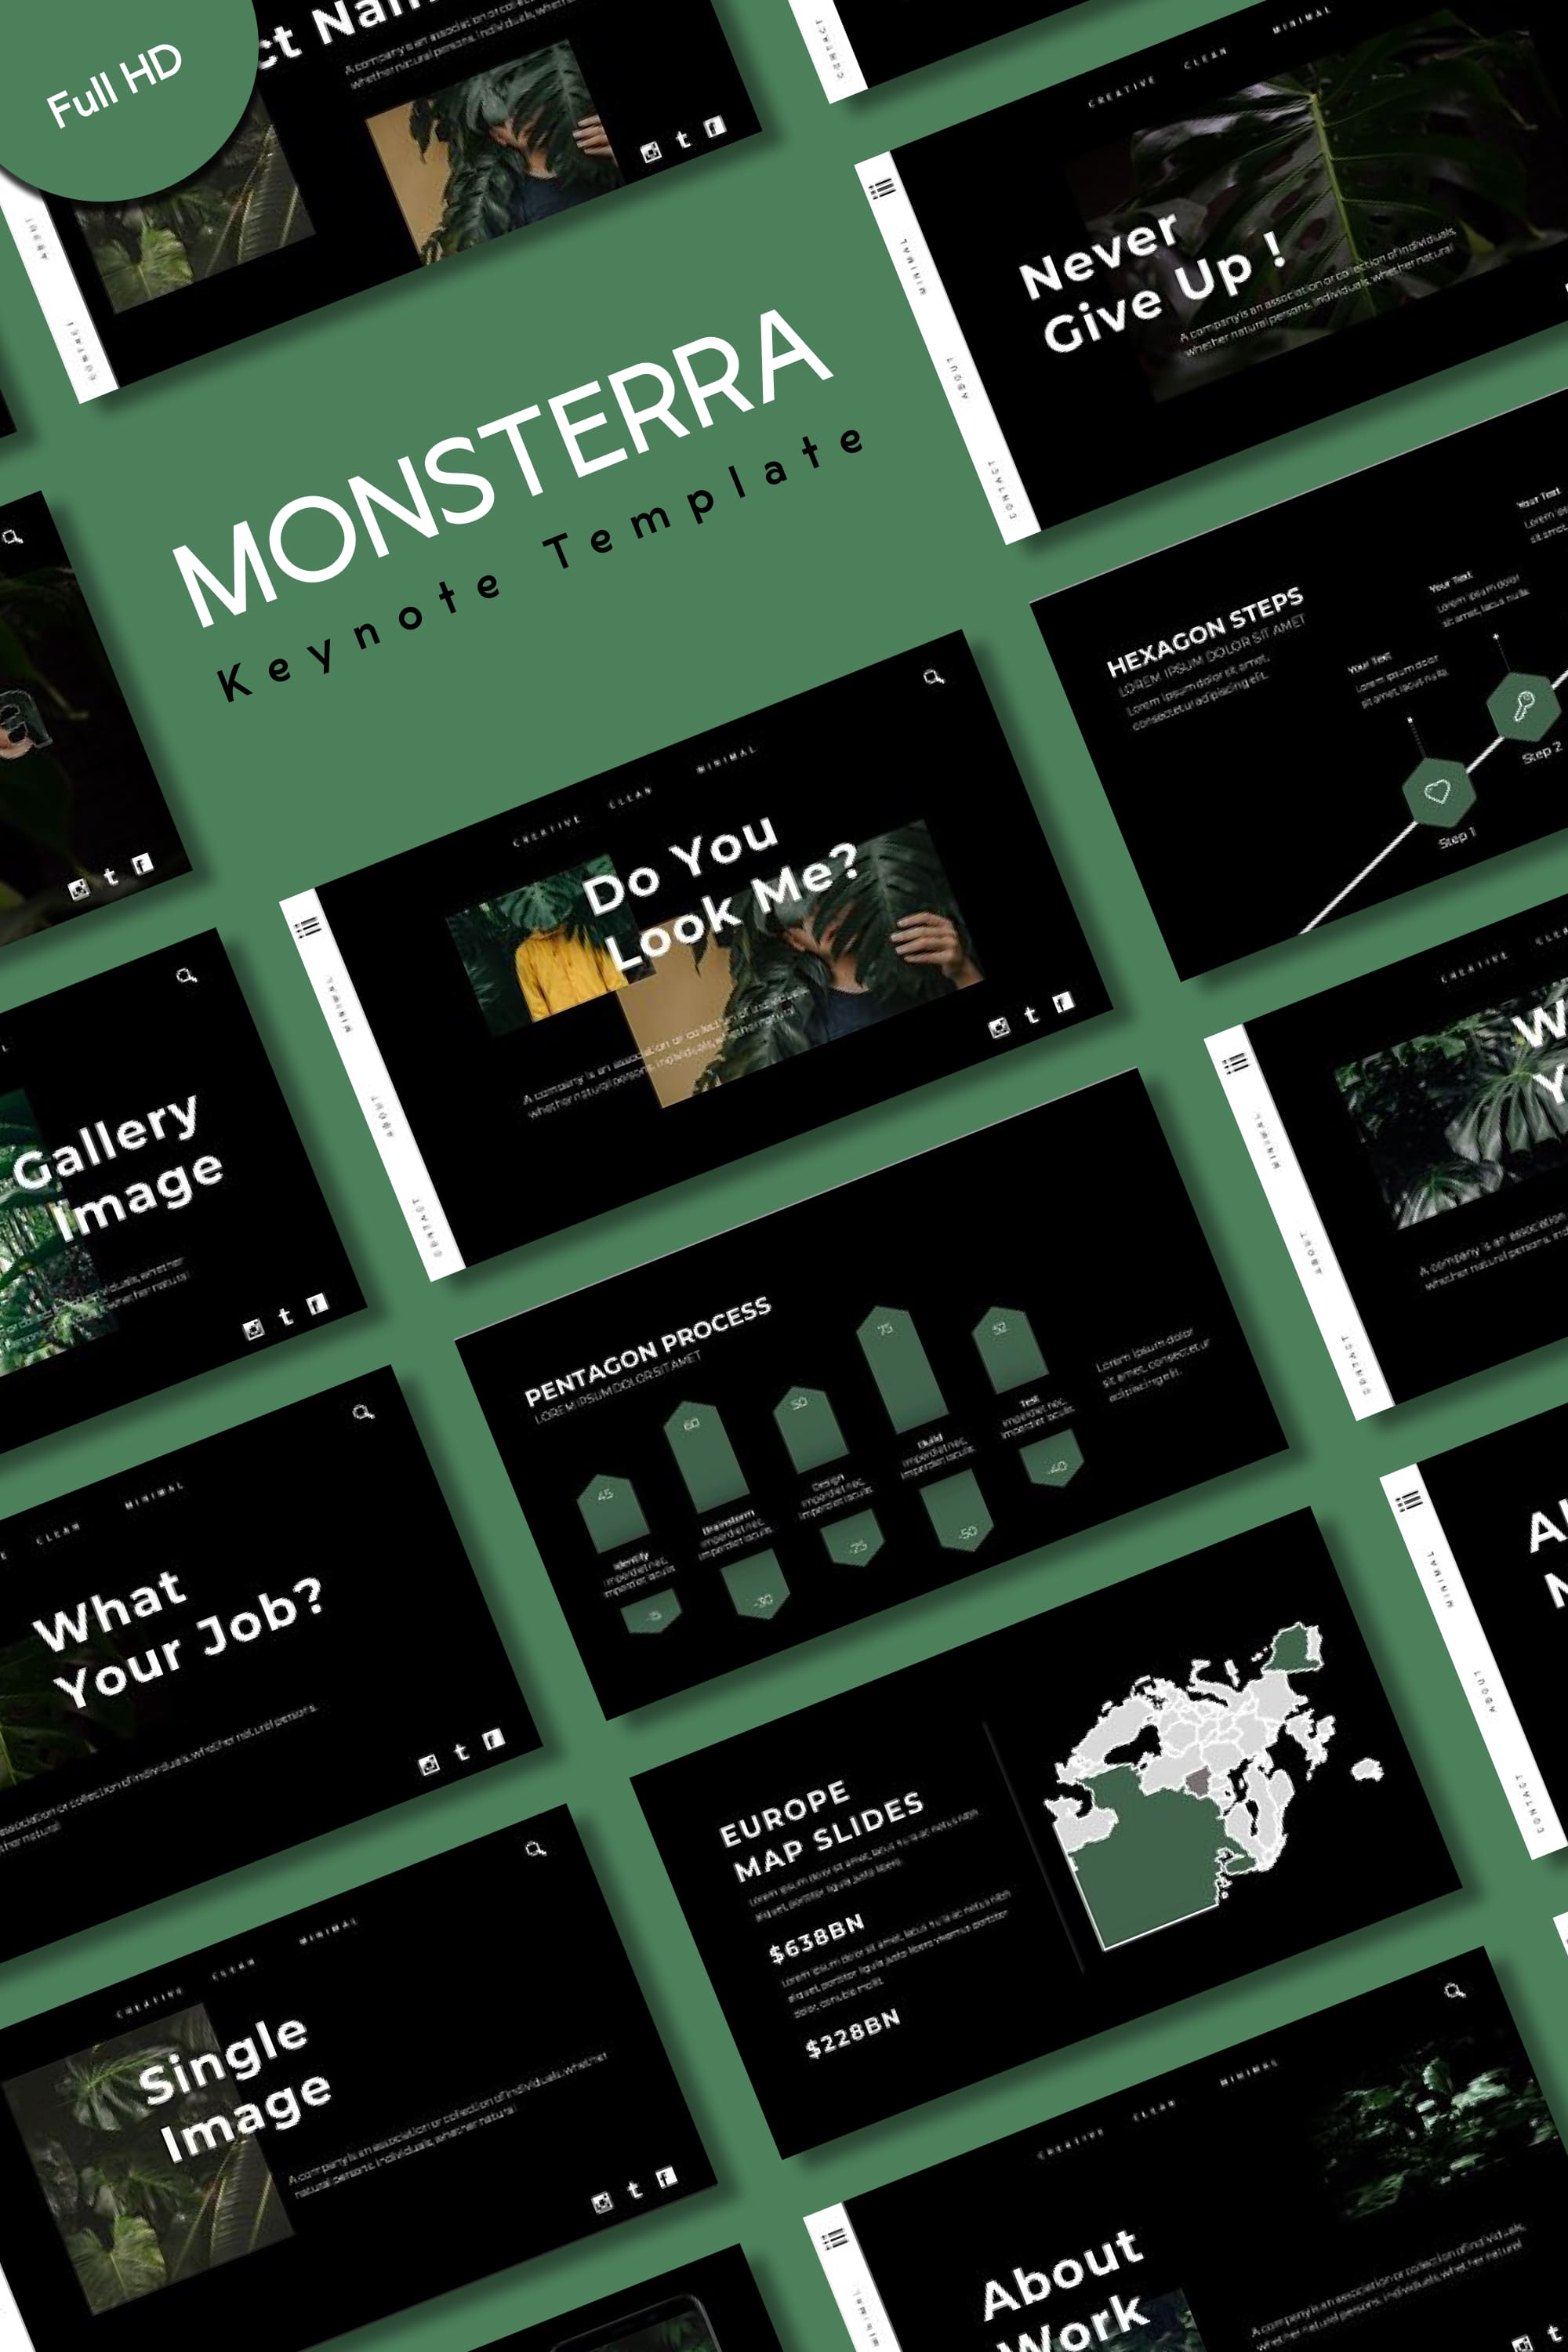 Monsterra keynote template - pinterest image preview.